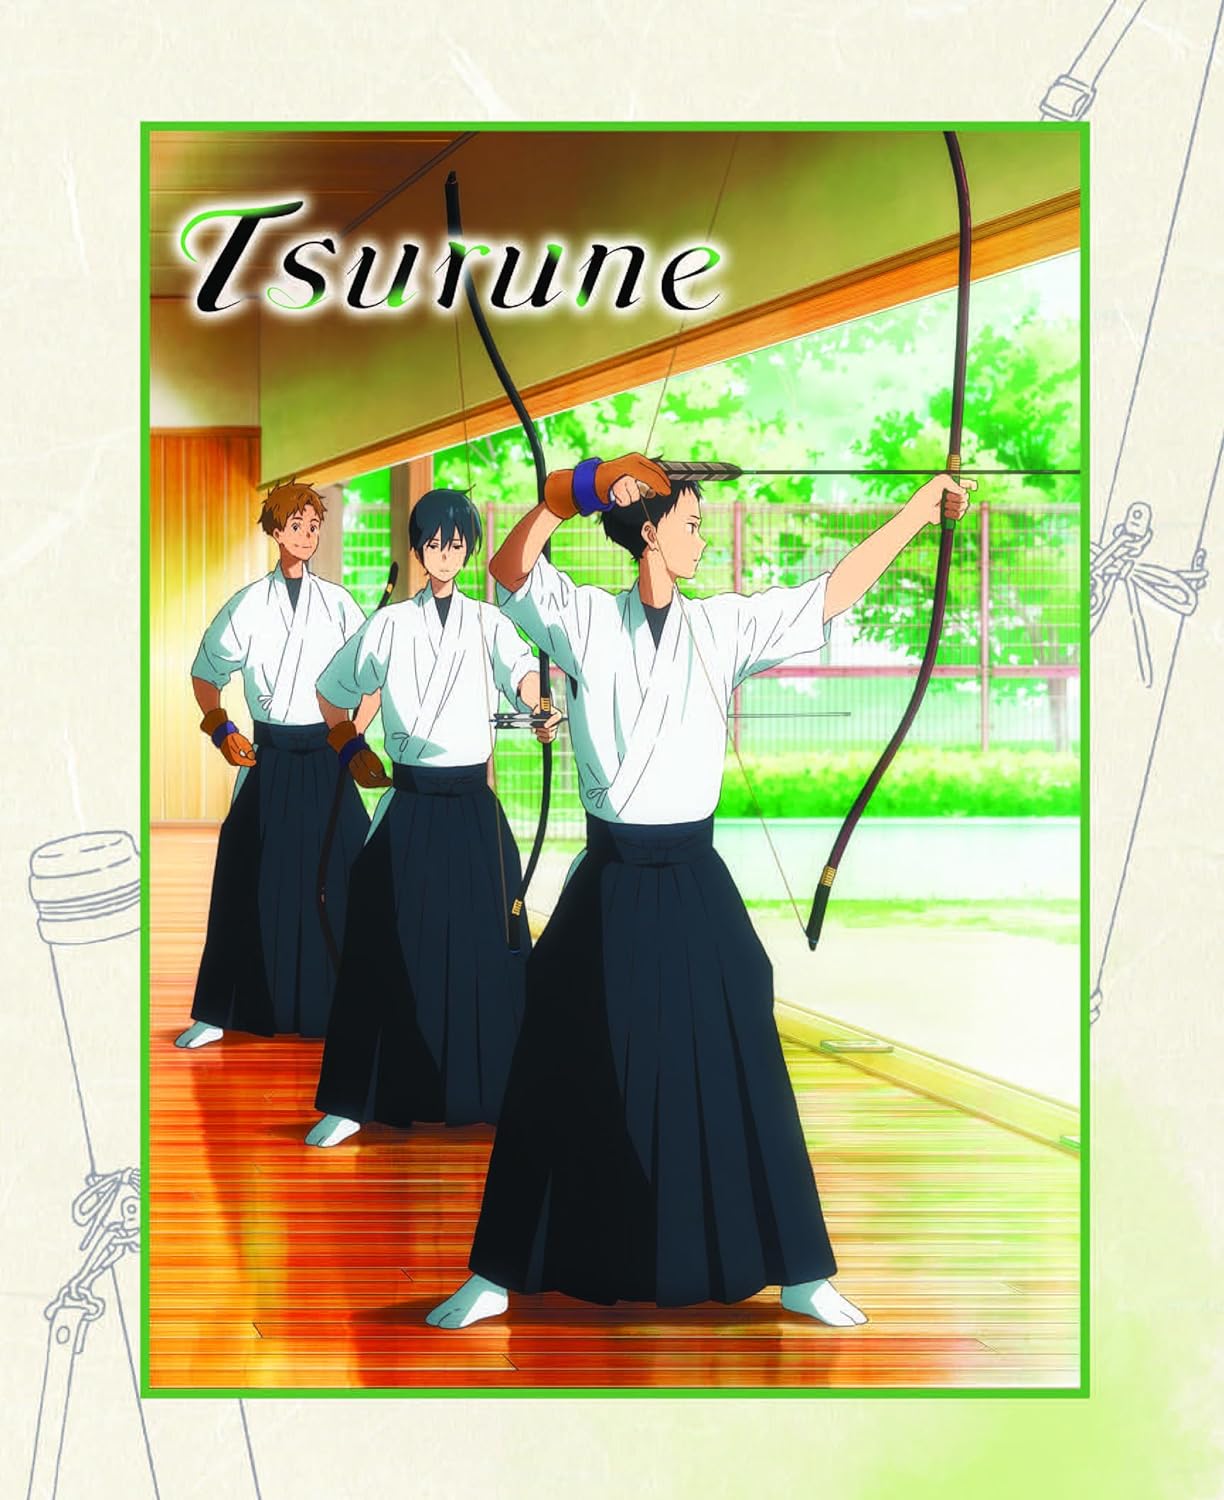 Tsurune Season 2 Takes Dramatic Turn in New Visual